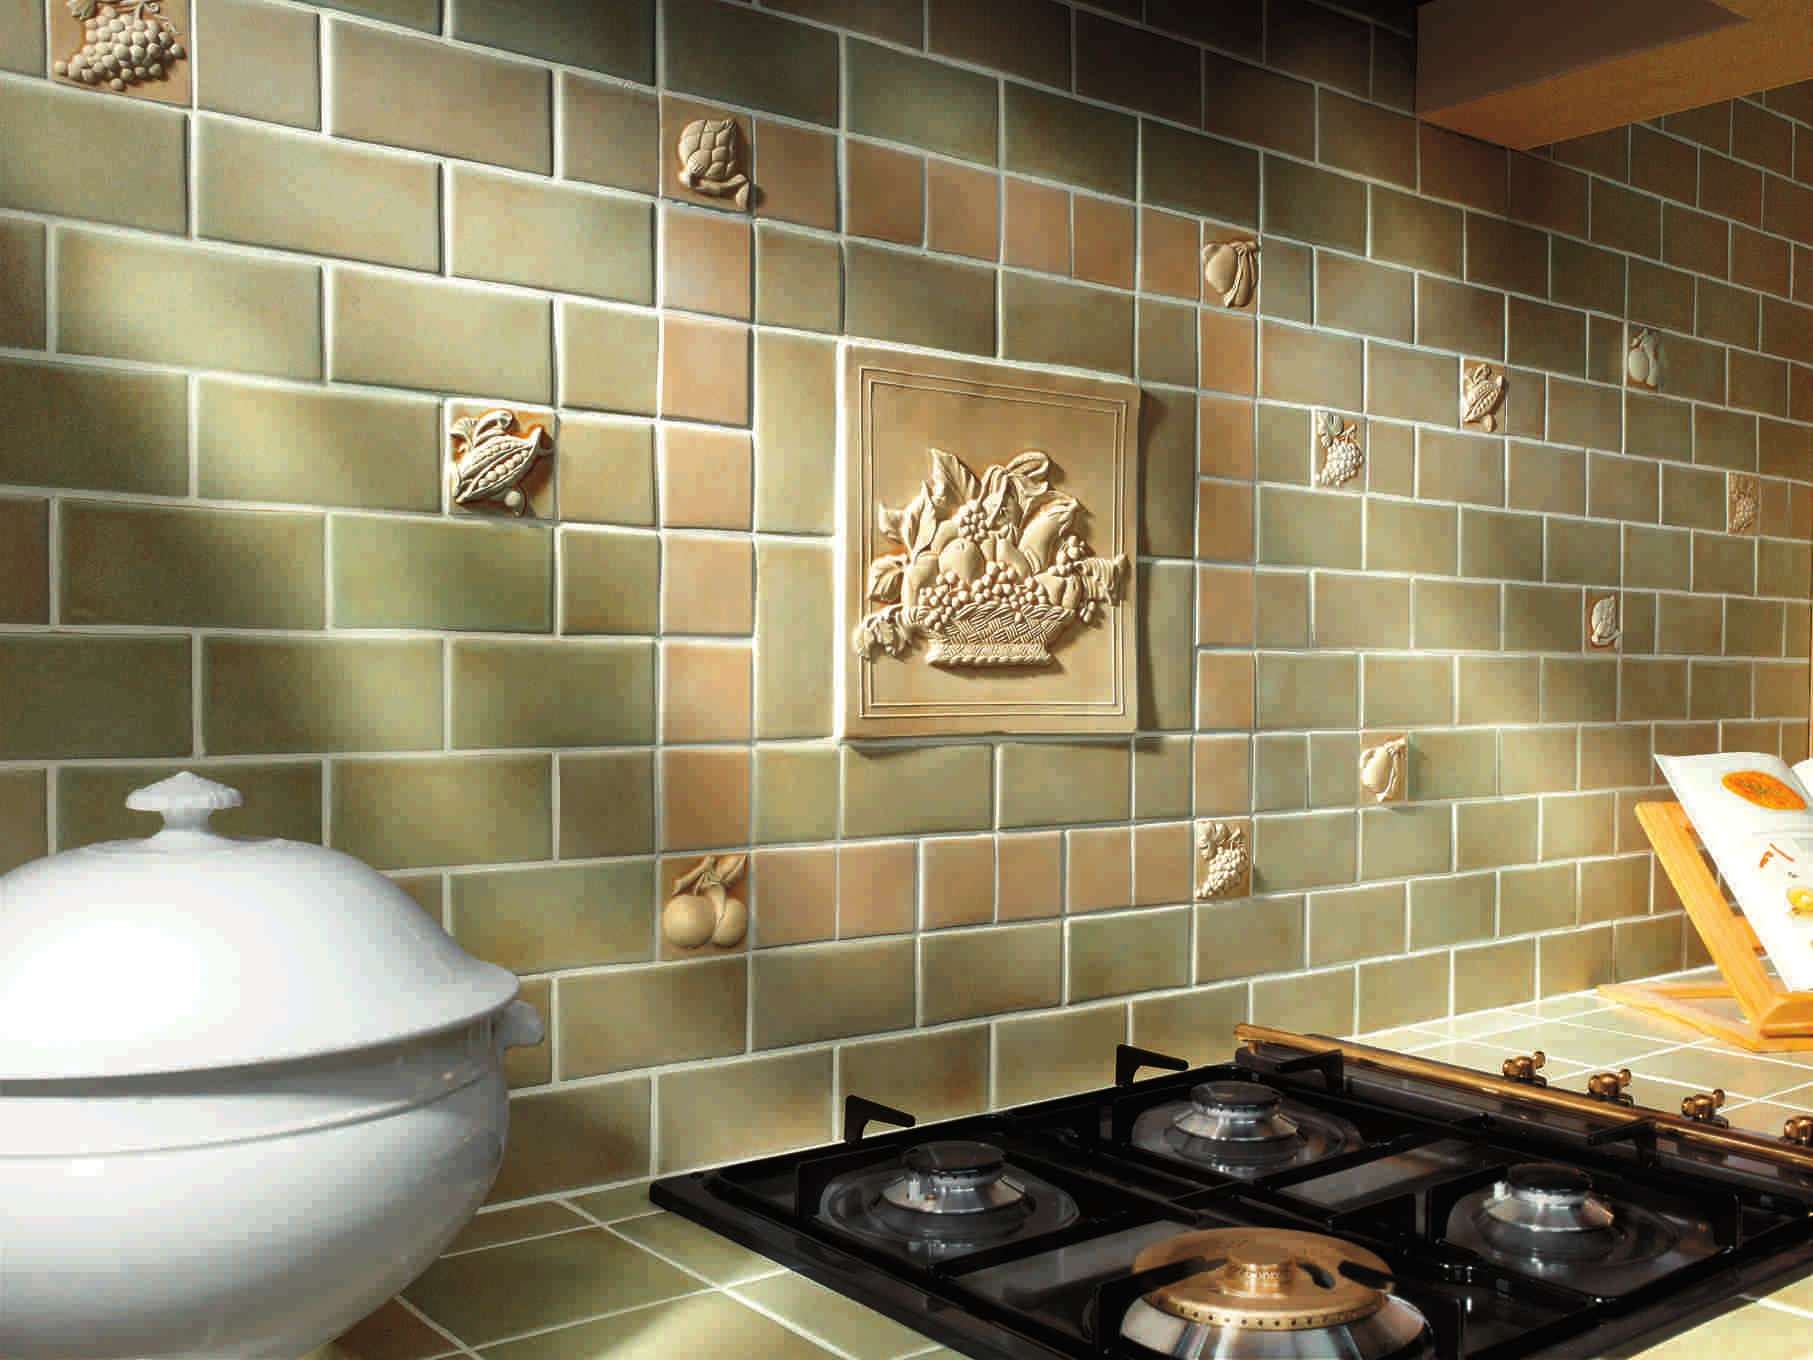 Фартук на кухне из керамической плитки фото